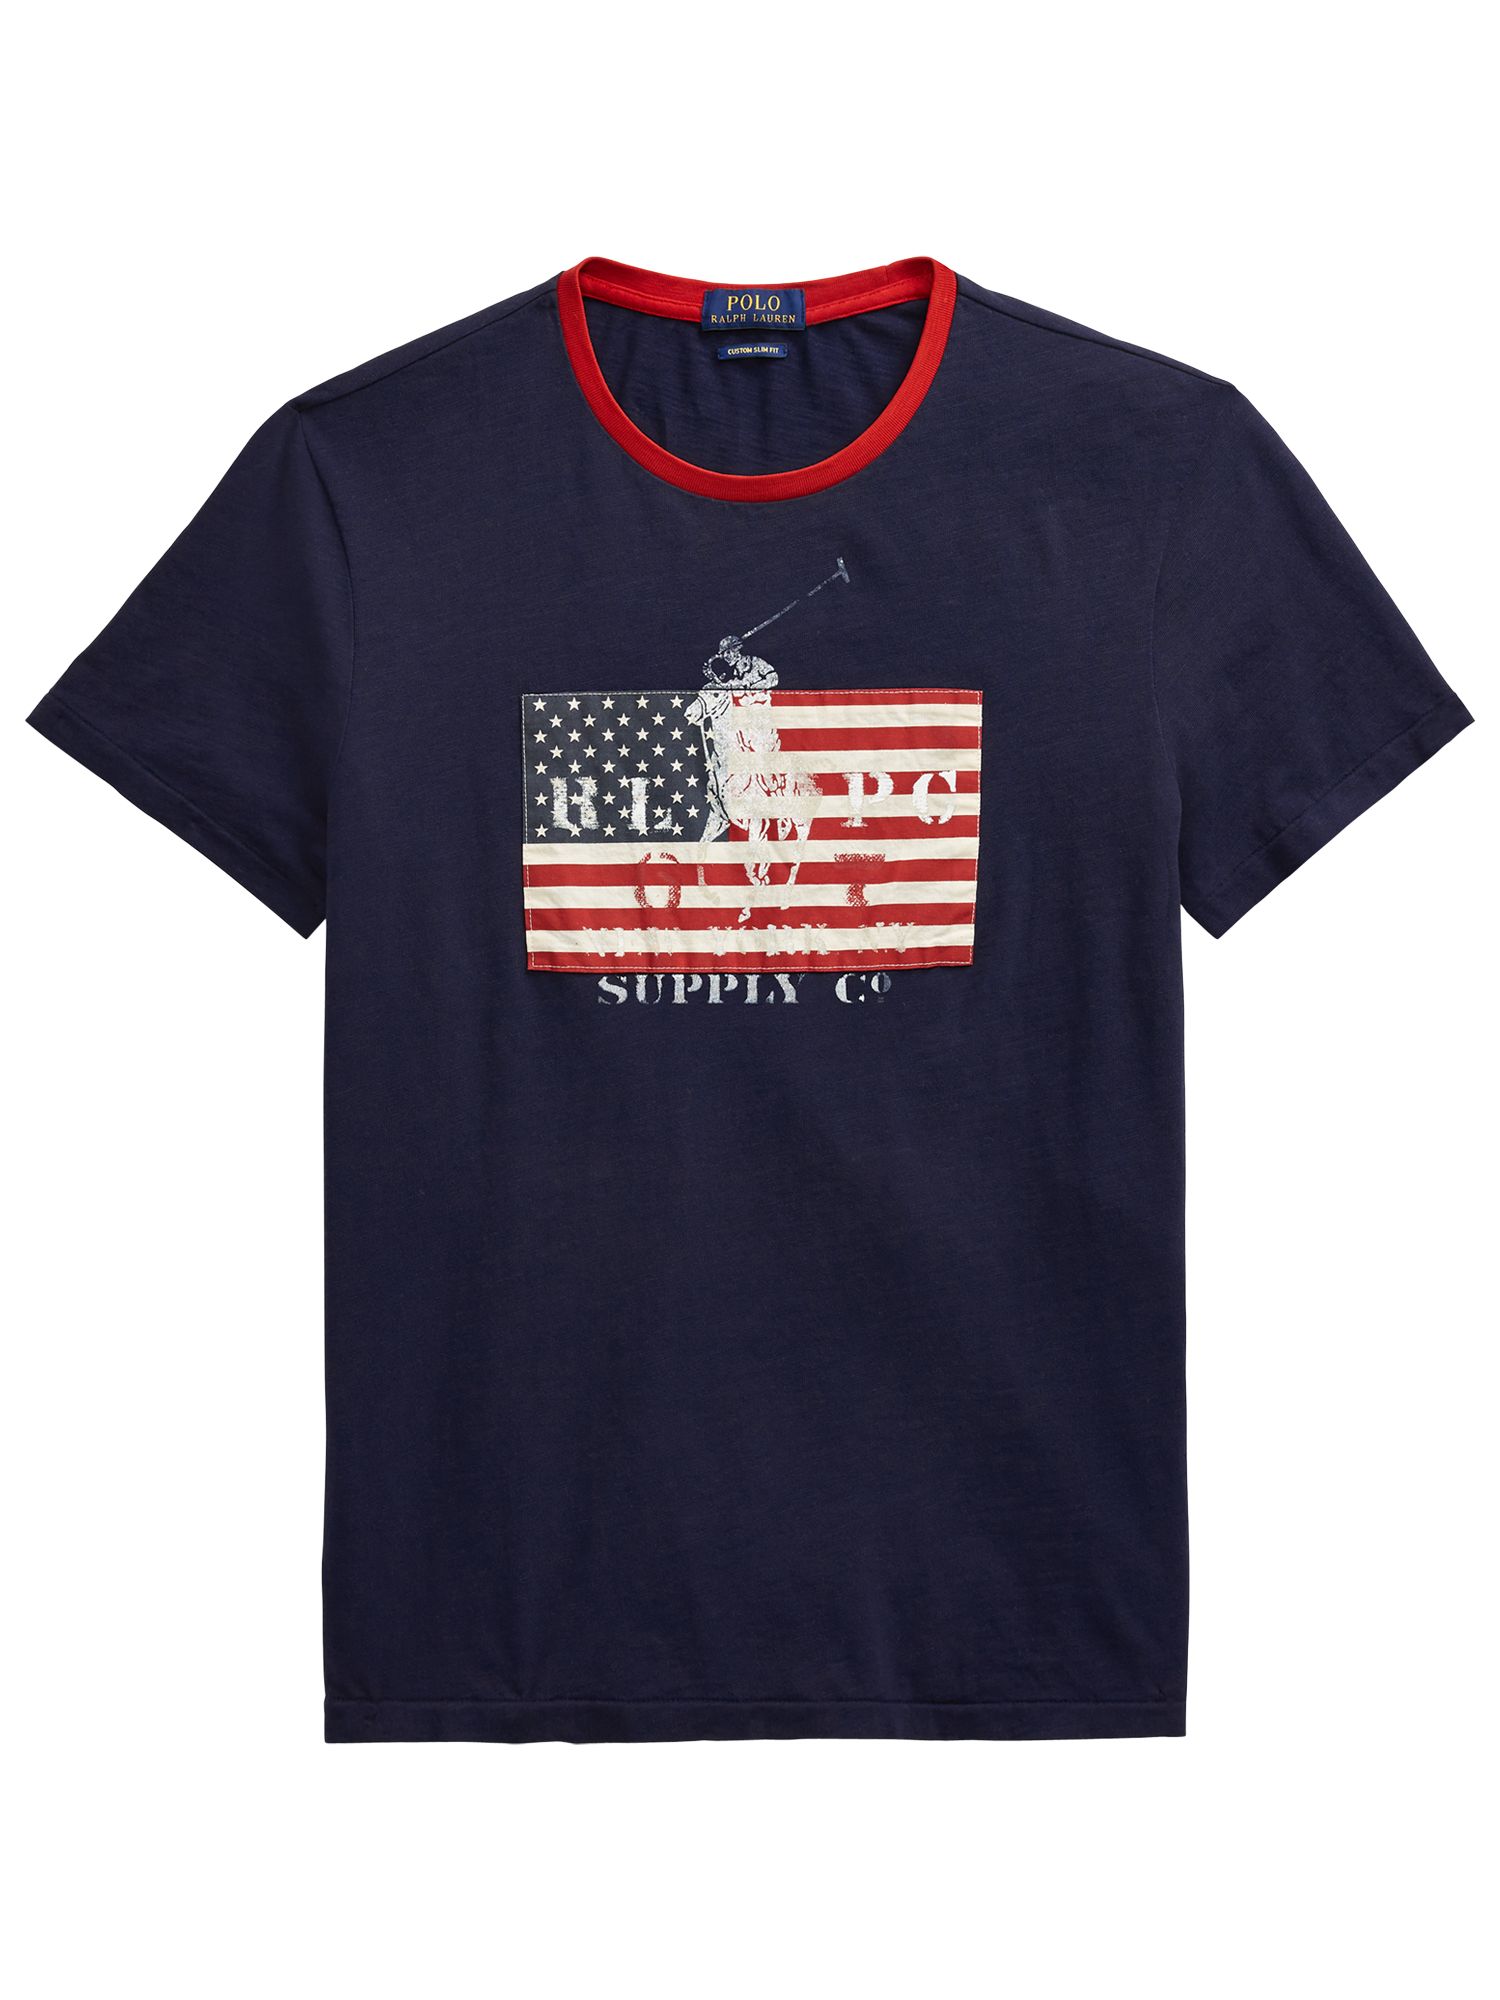 polo ralph lauren american flag shirt